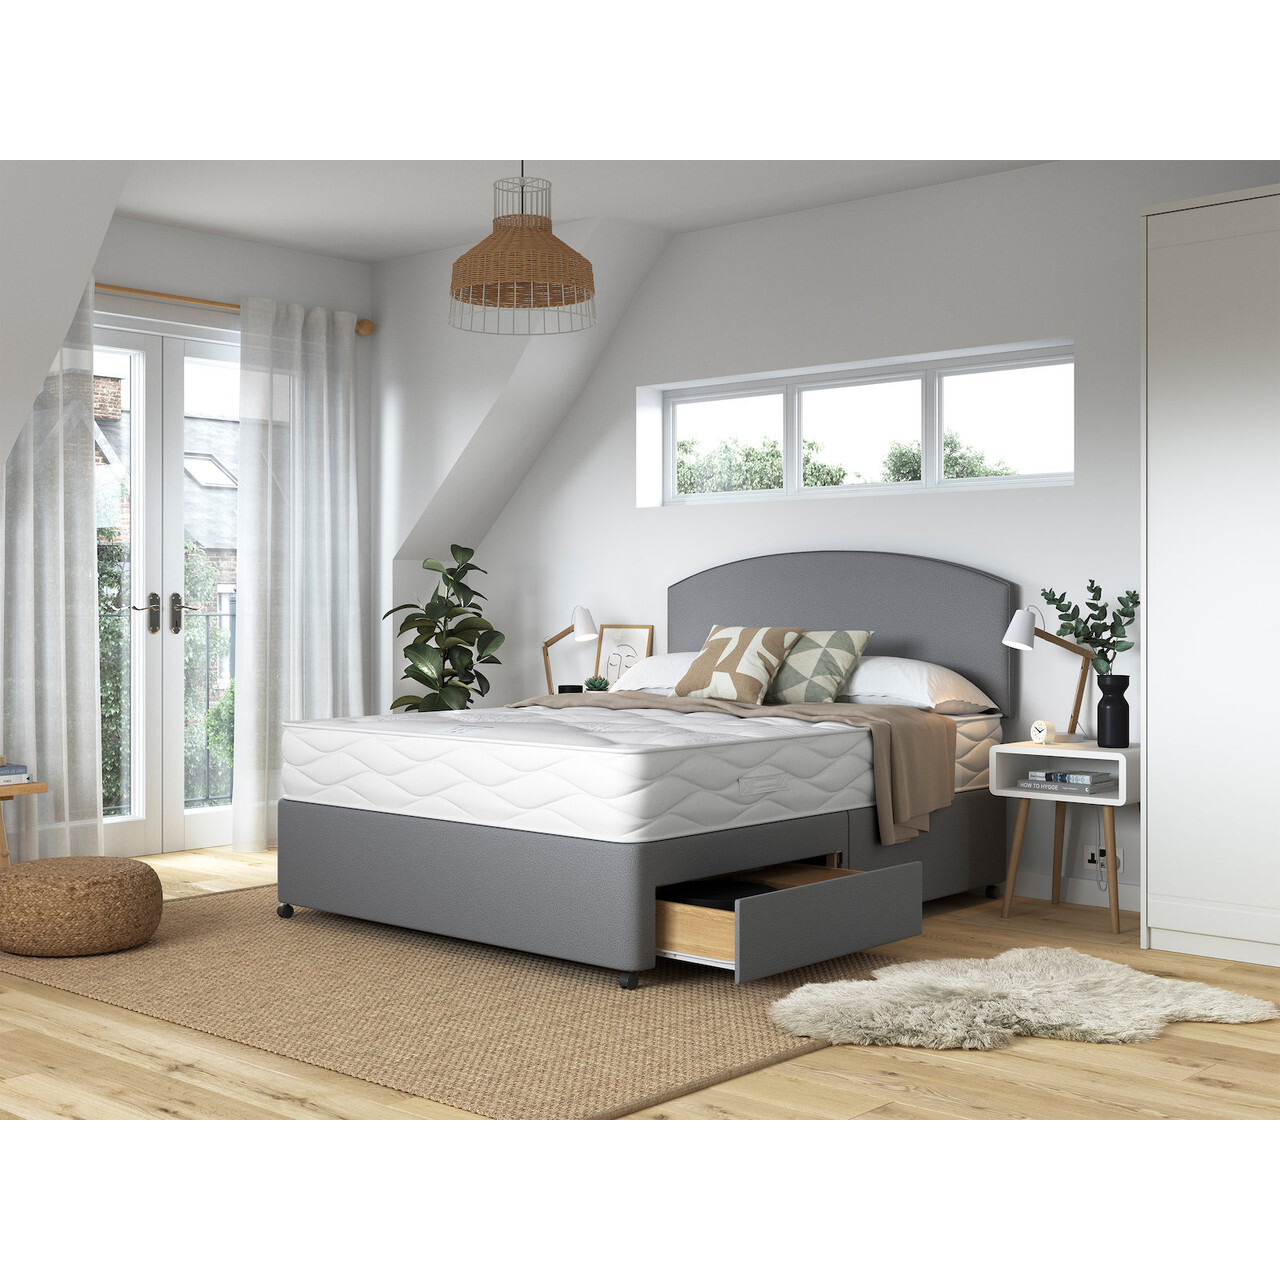 Pensilva Ortho Comfort Divan Bed Set - image 1